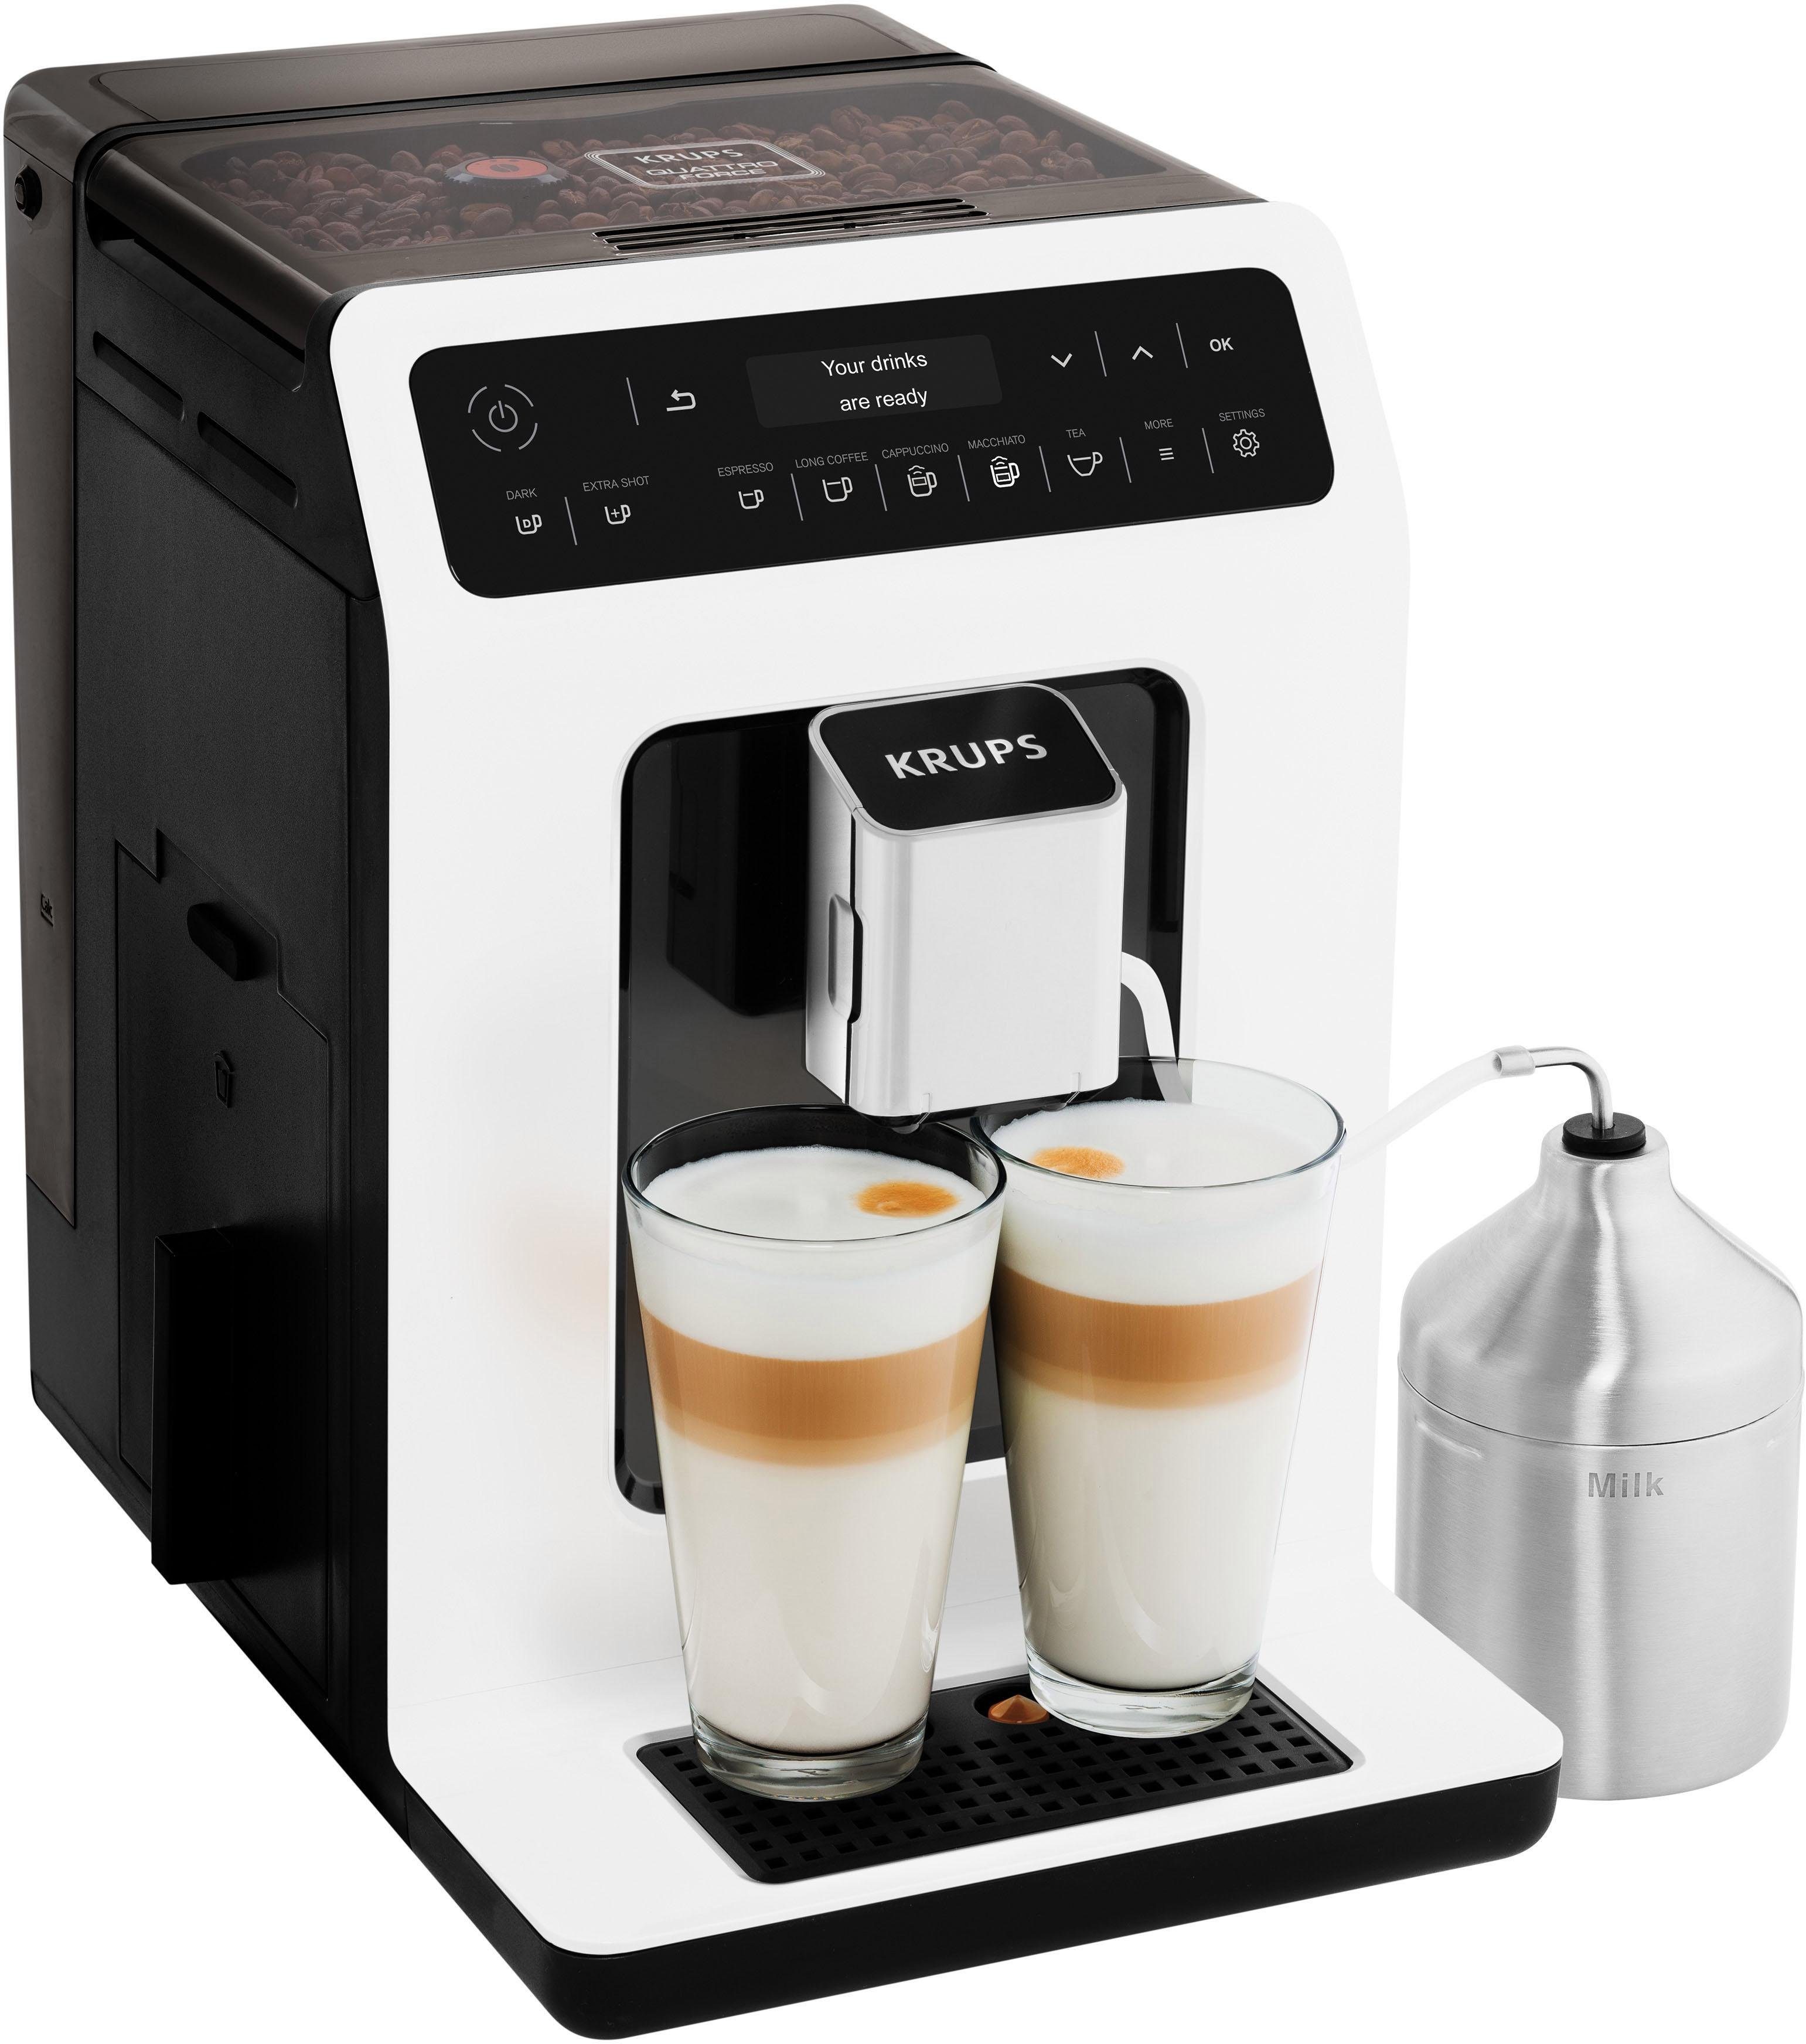 Krups Kaffeevollautomat EA8911 Evidence, inkl. Milchbehälter, intuitiver  OLED-Display, extra-großer Wassertank online kaufen | OTTO